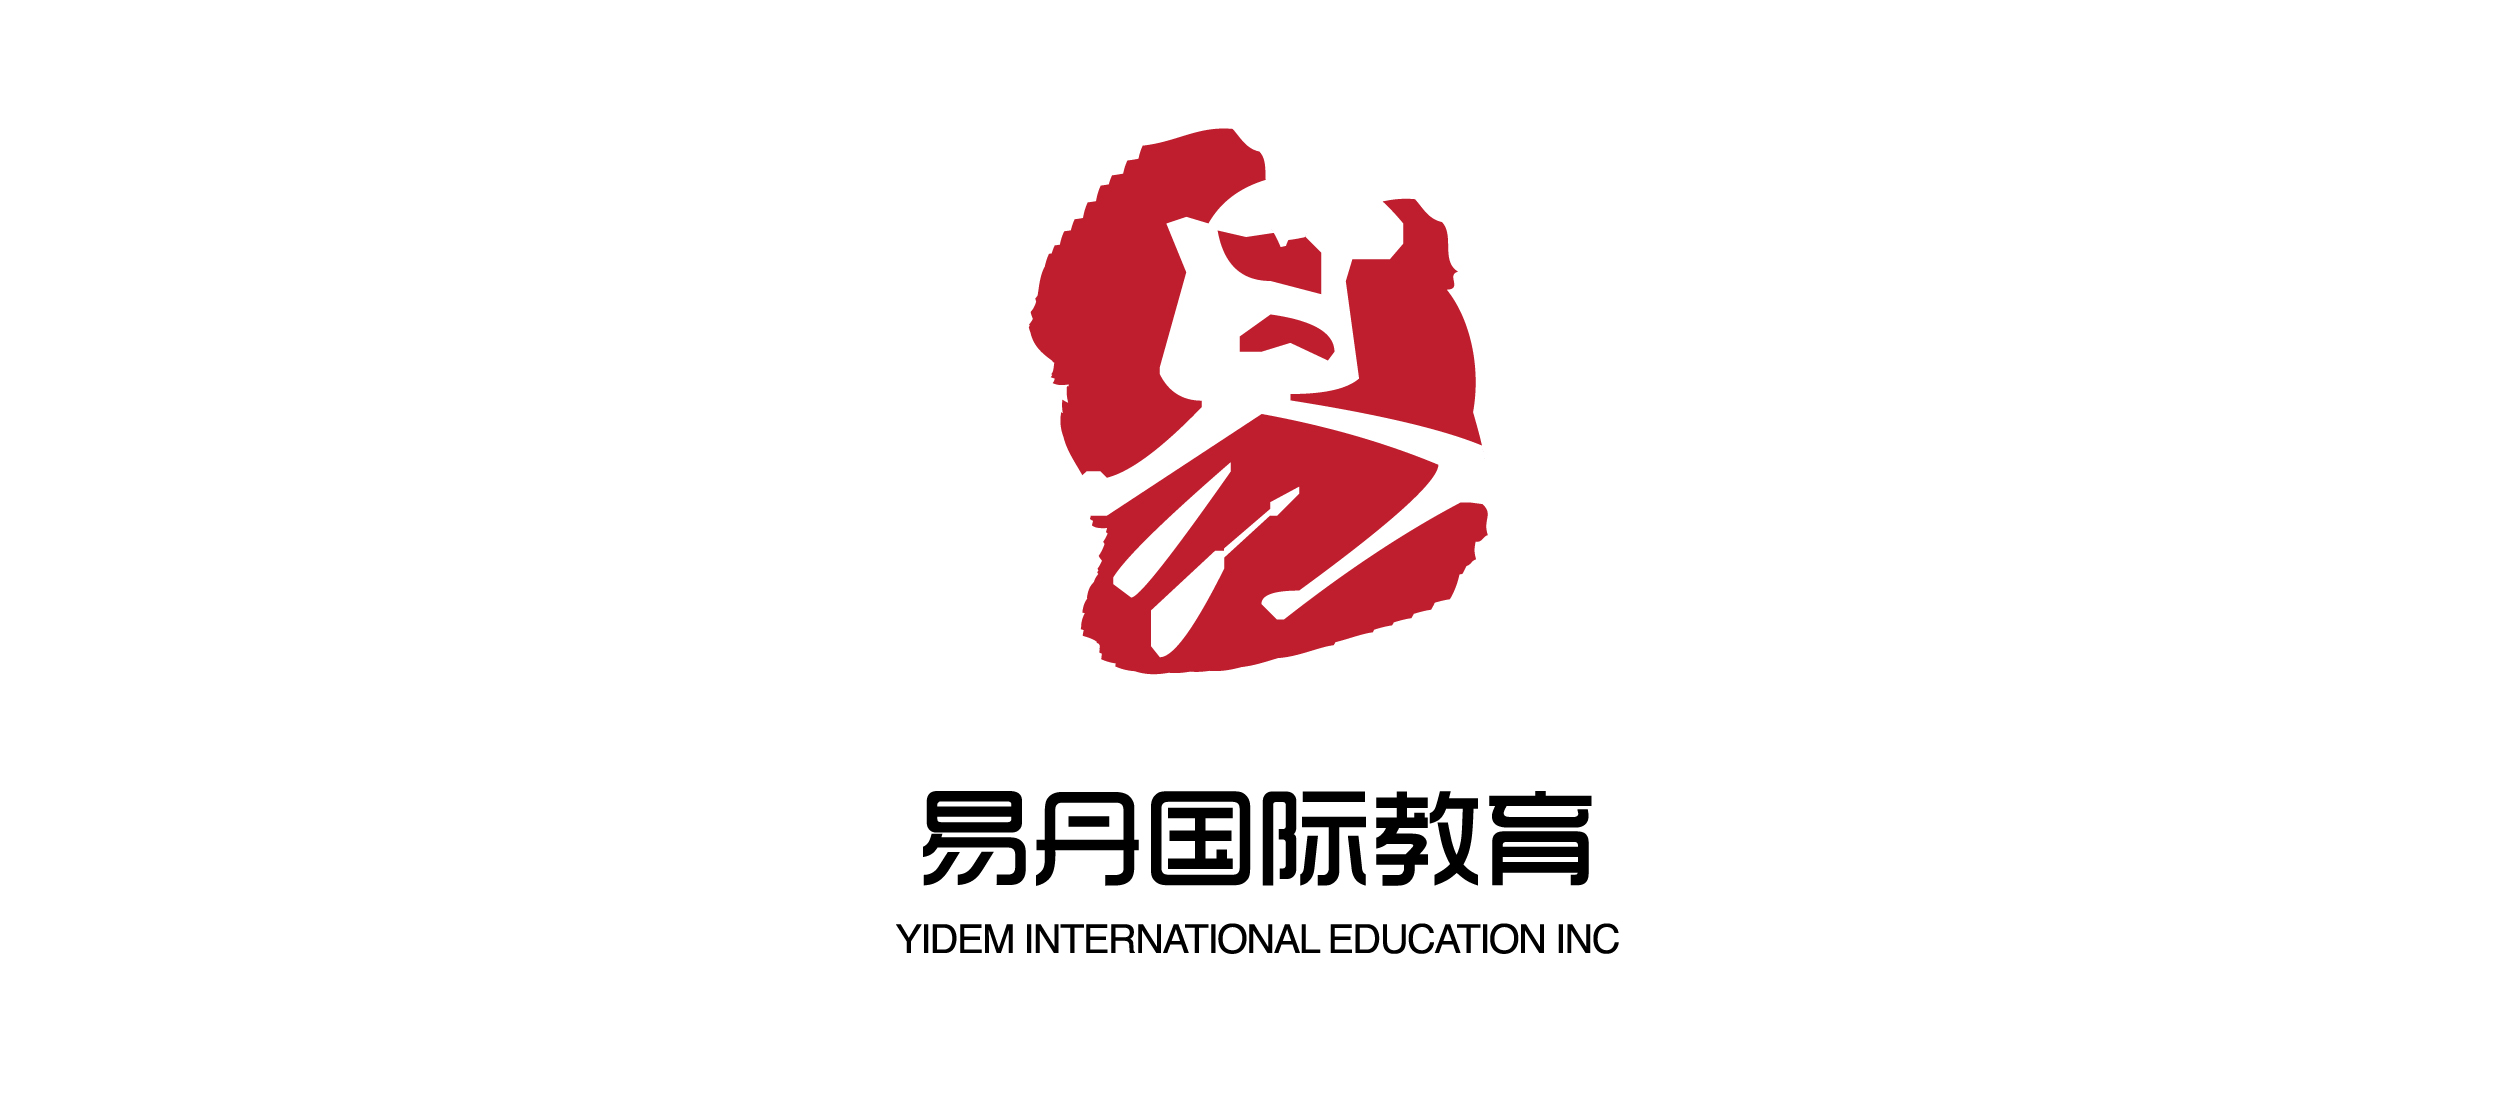 YIDEM INTERNATIONAL EDUCATION INC